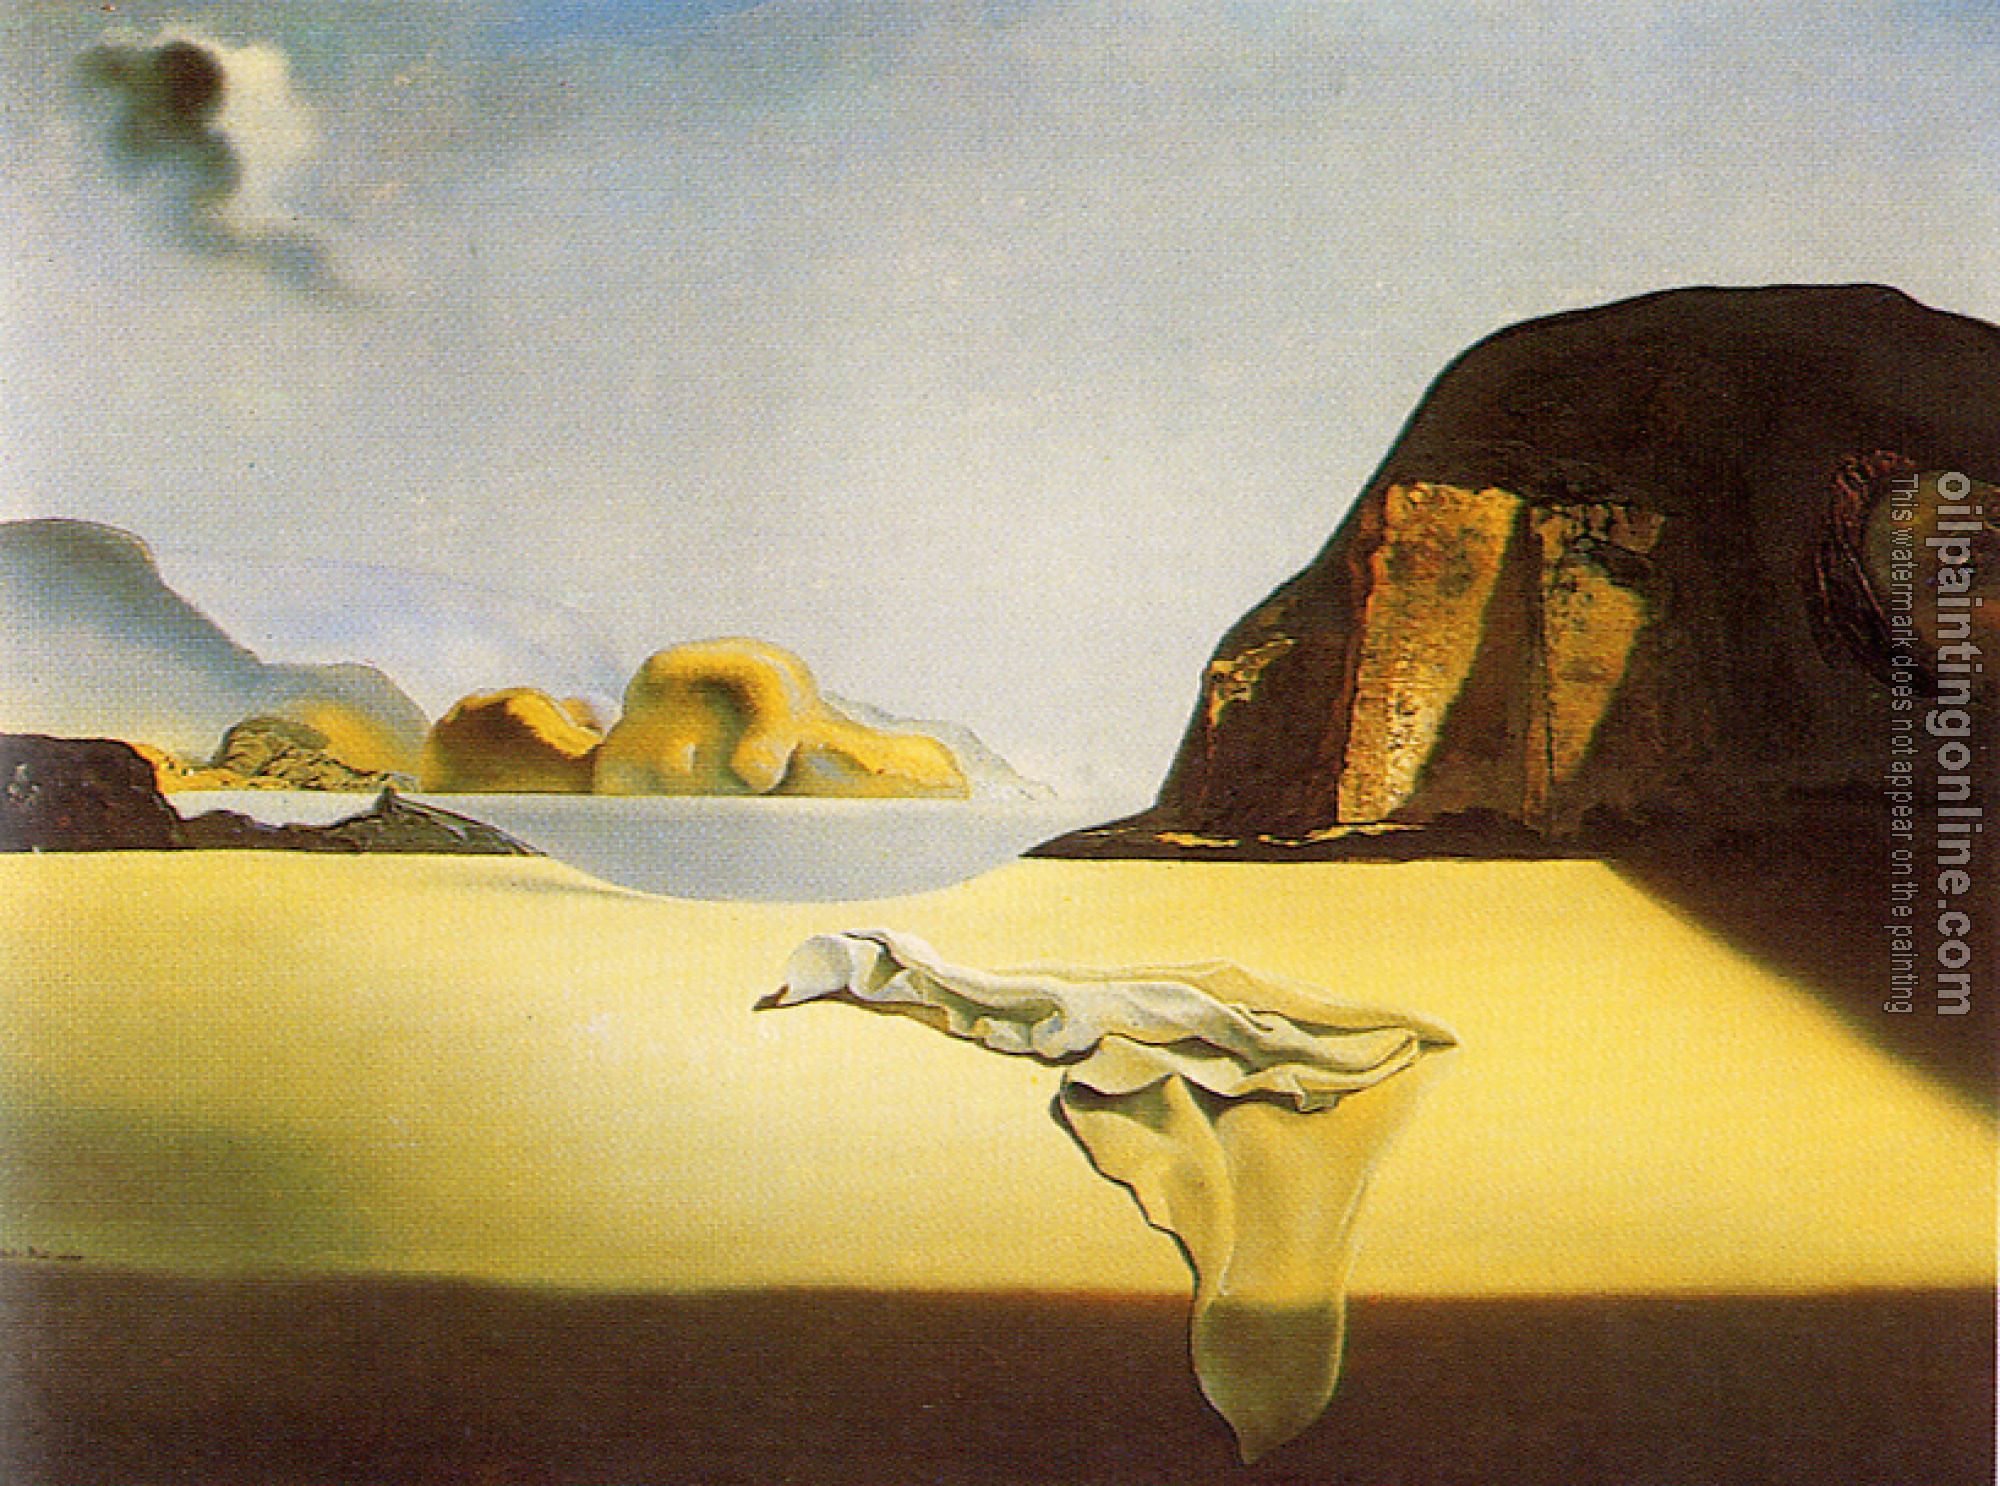 Dali, Salvador - The Transparent Simulacrum of the Feigned Image